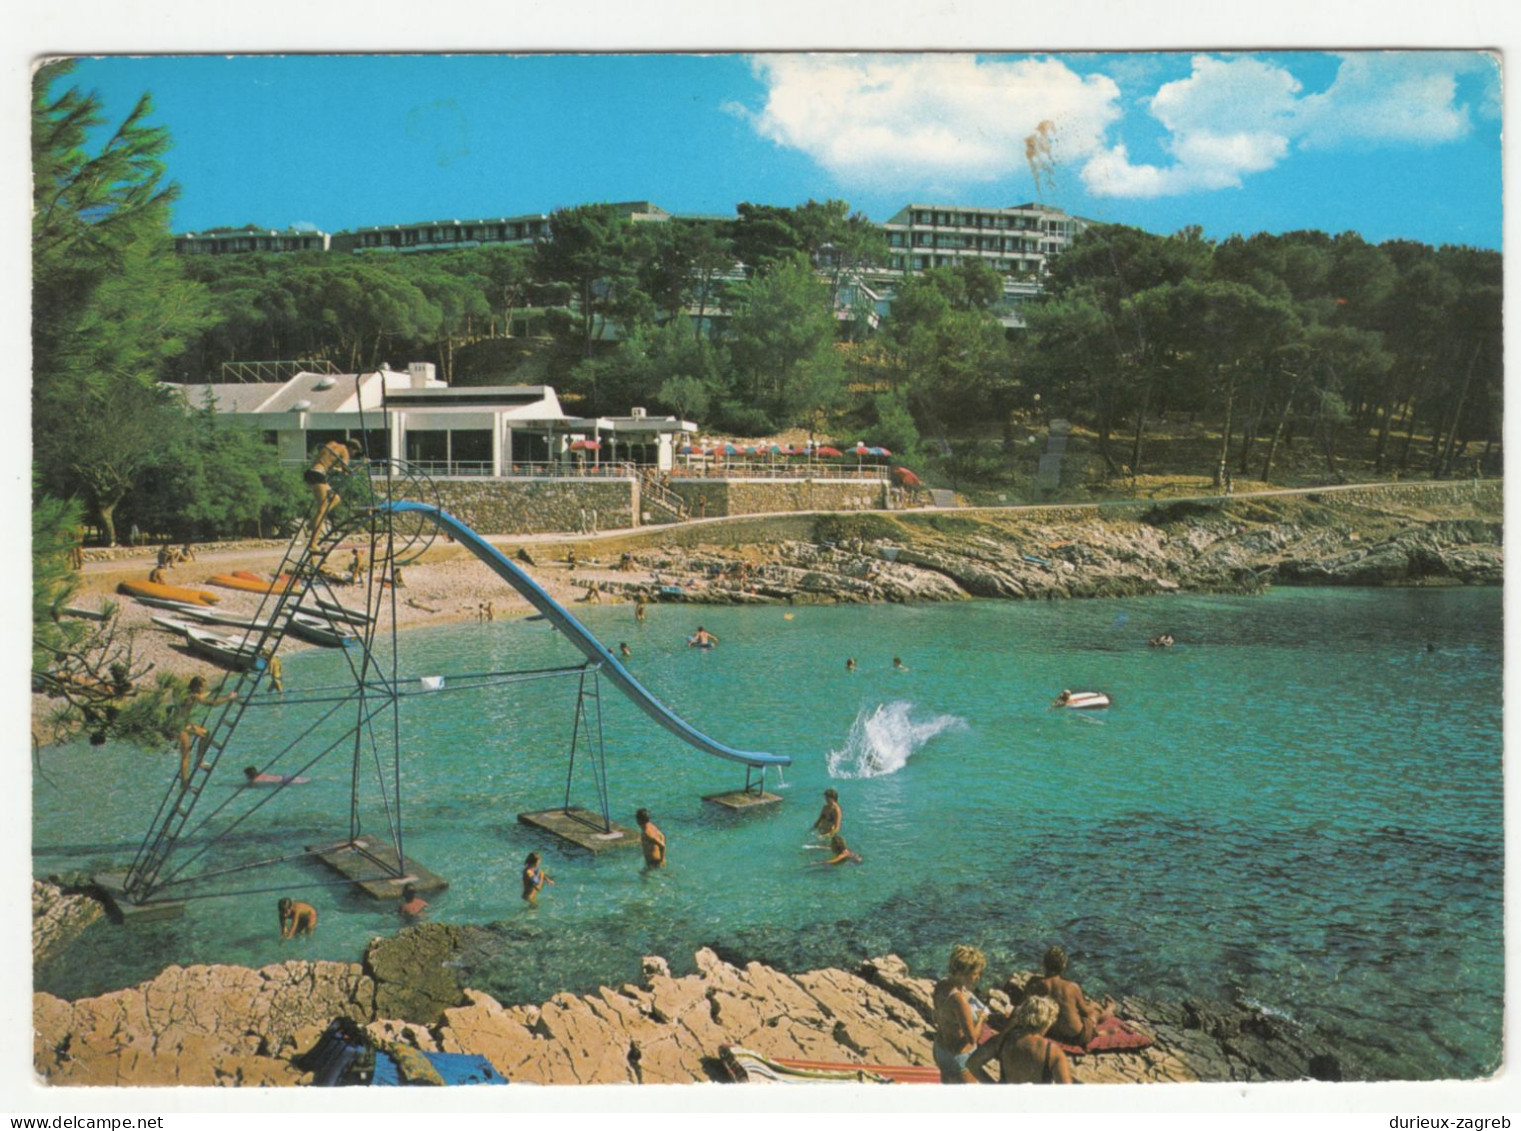 Mali Lošinj Old Postcard Posted 1978 240510 - Croatia